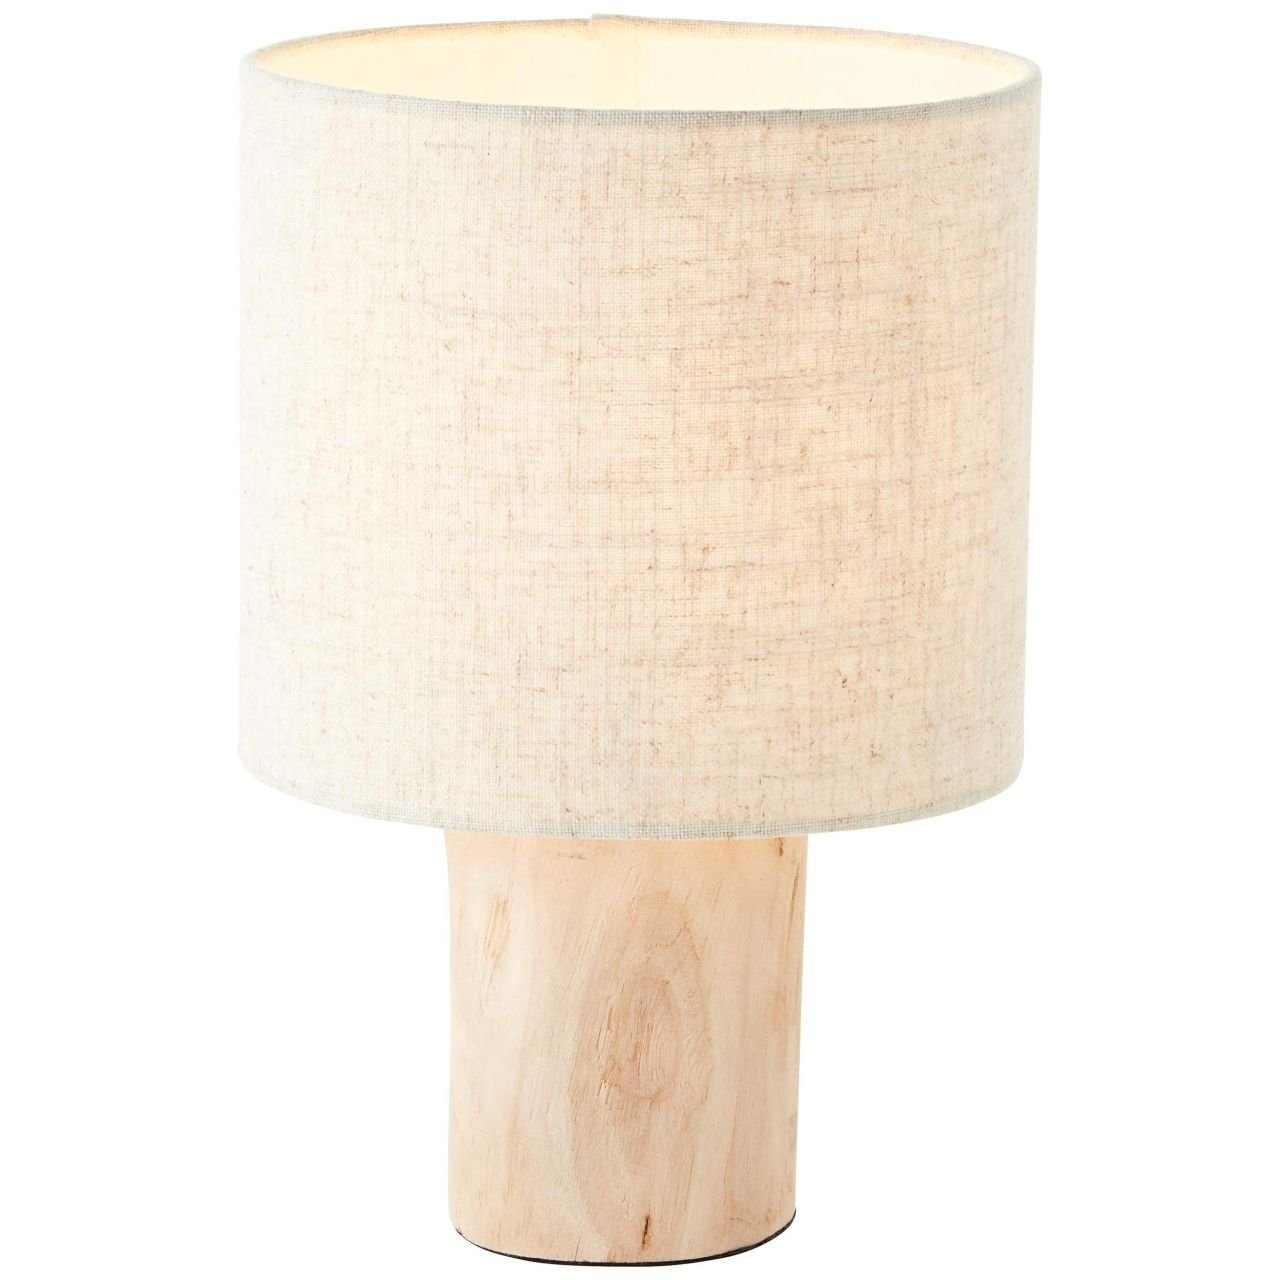 Pia 1x Brilliant nachhaltiger Tischleuchte Lampe, Holz aus Tischleuchte E27, natur, 40W, A60, Pia,